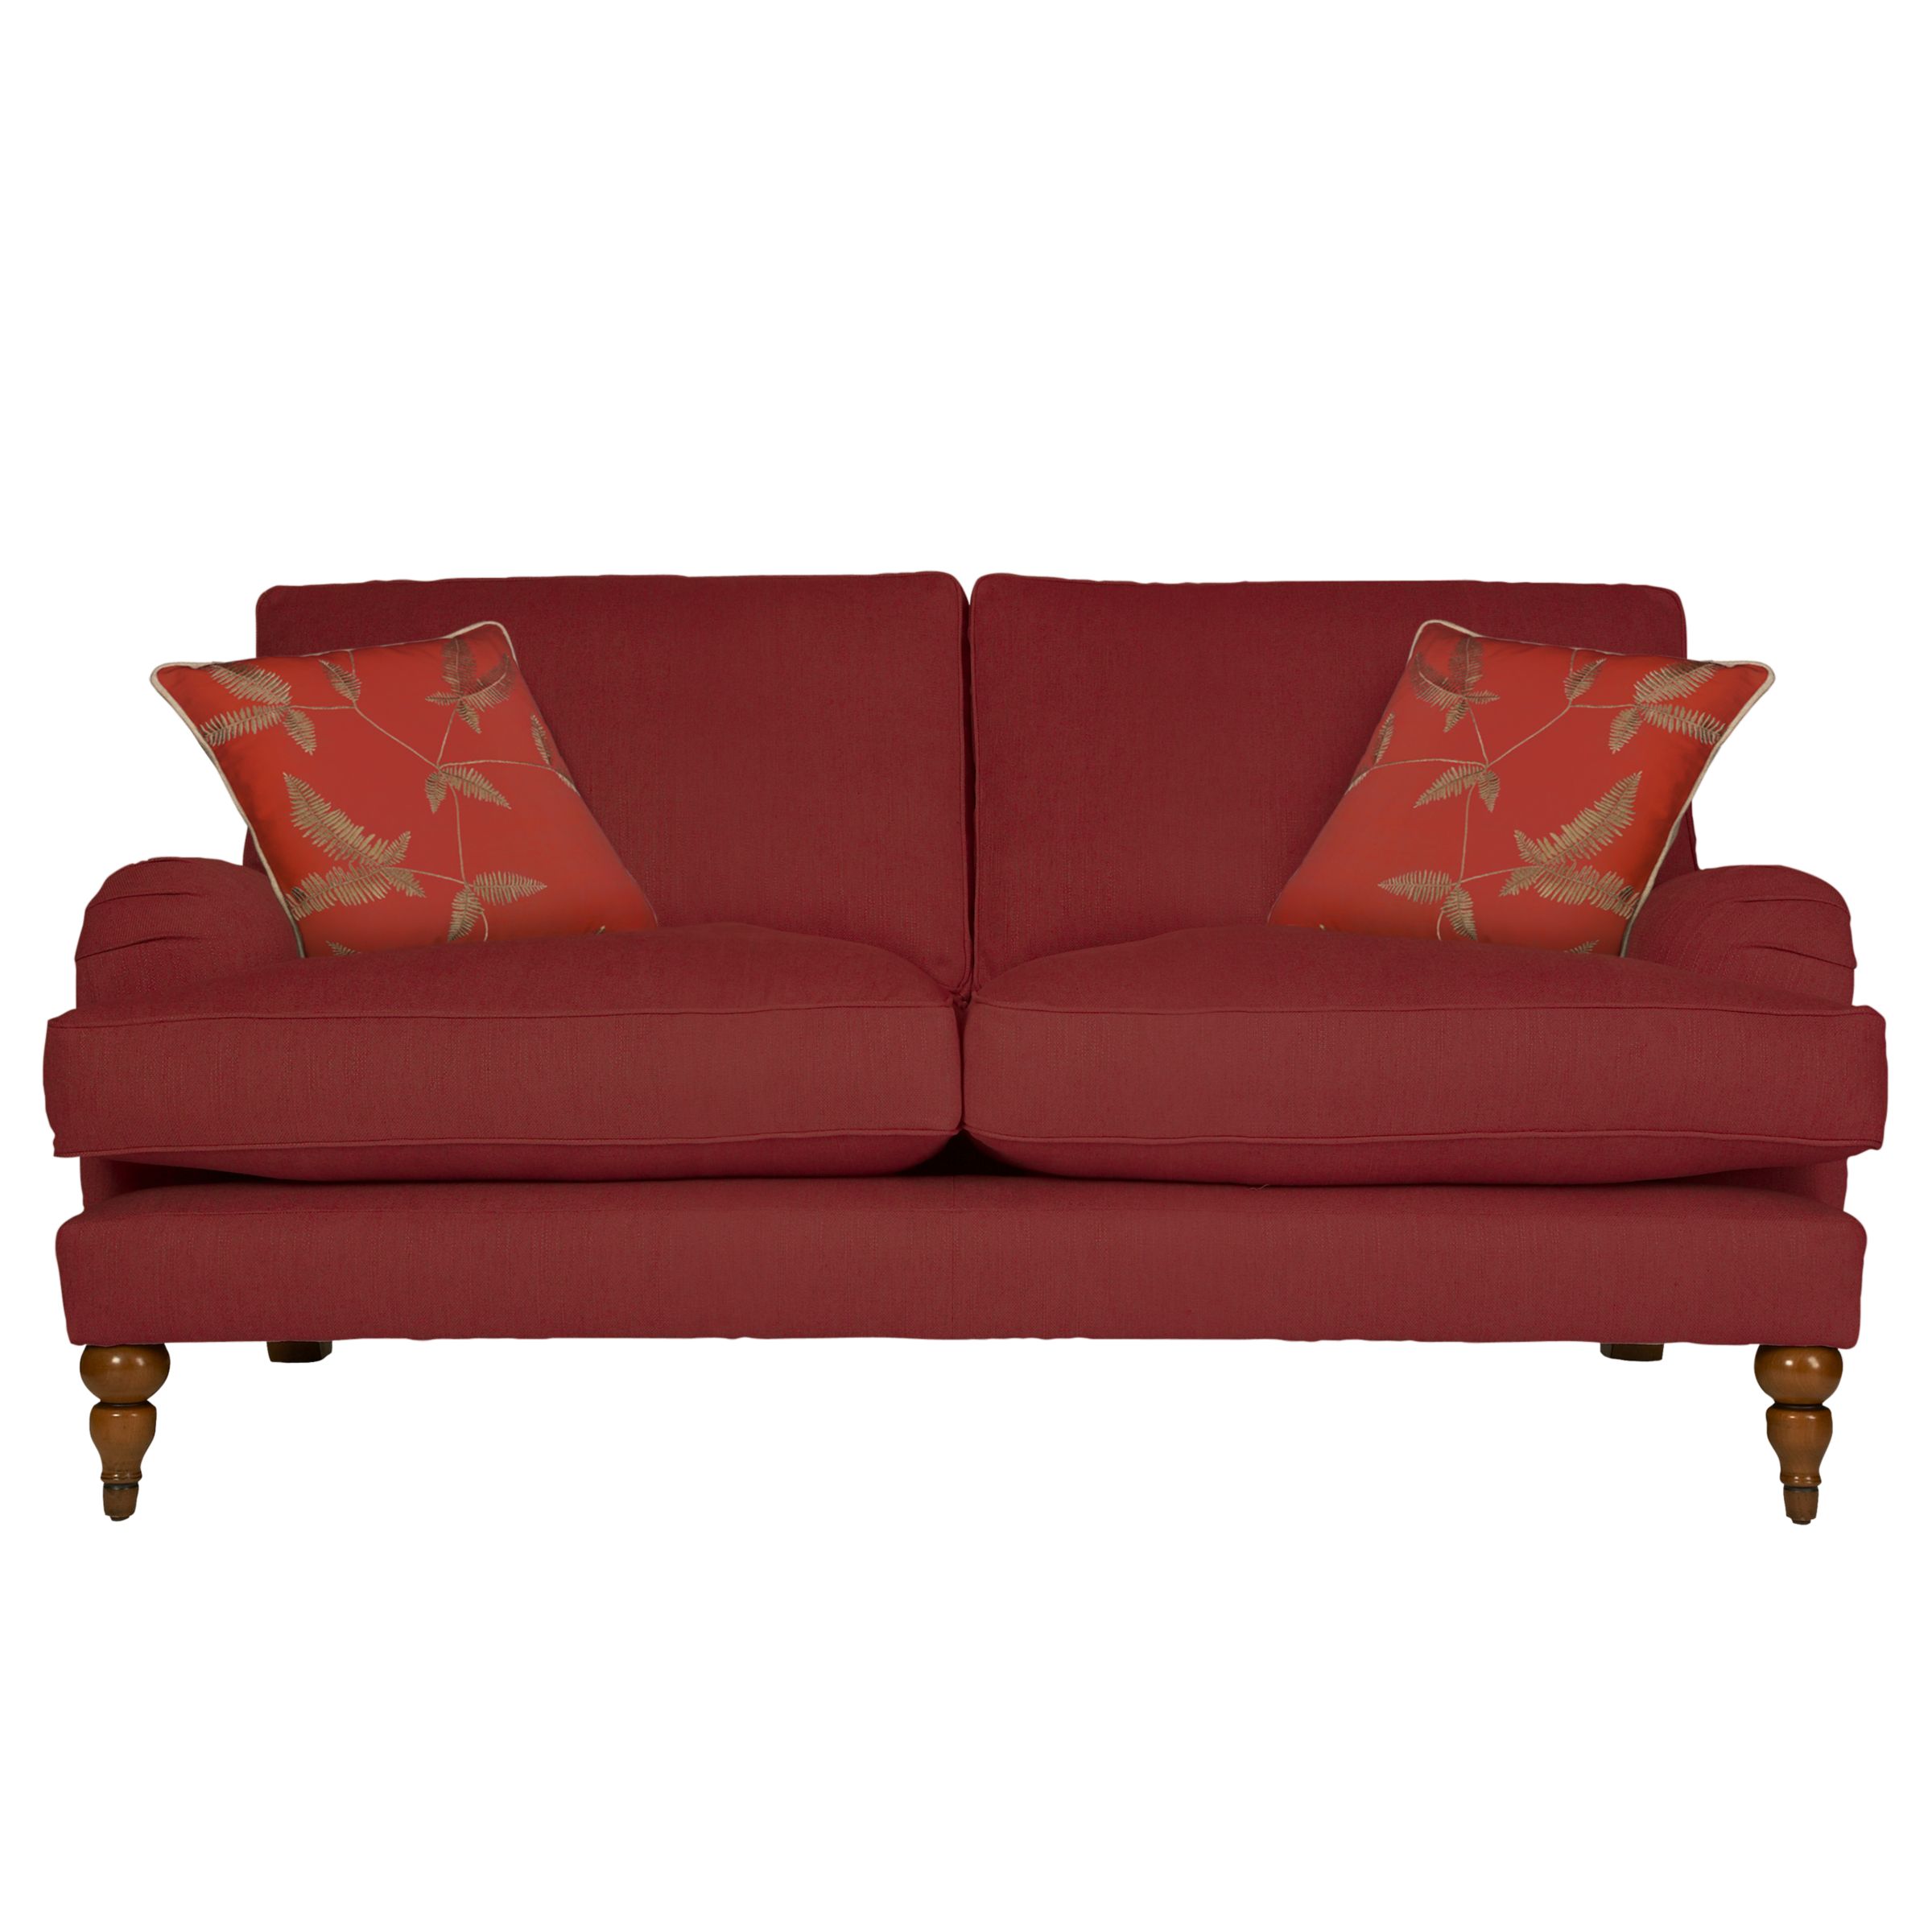 John Lewis Penryn Small Sofa, Bordeaux / Elna, width 156cm